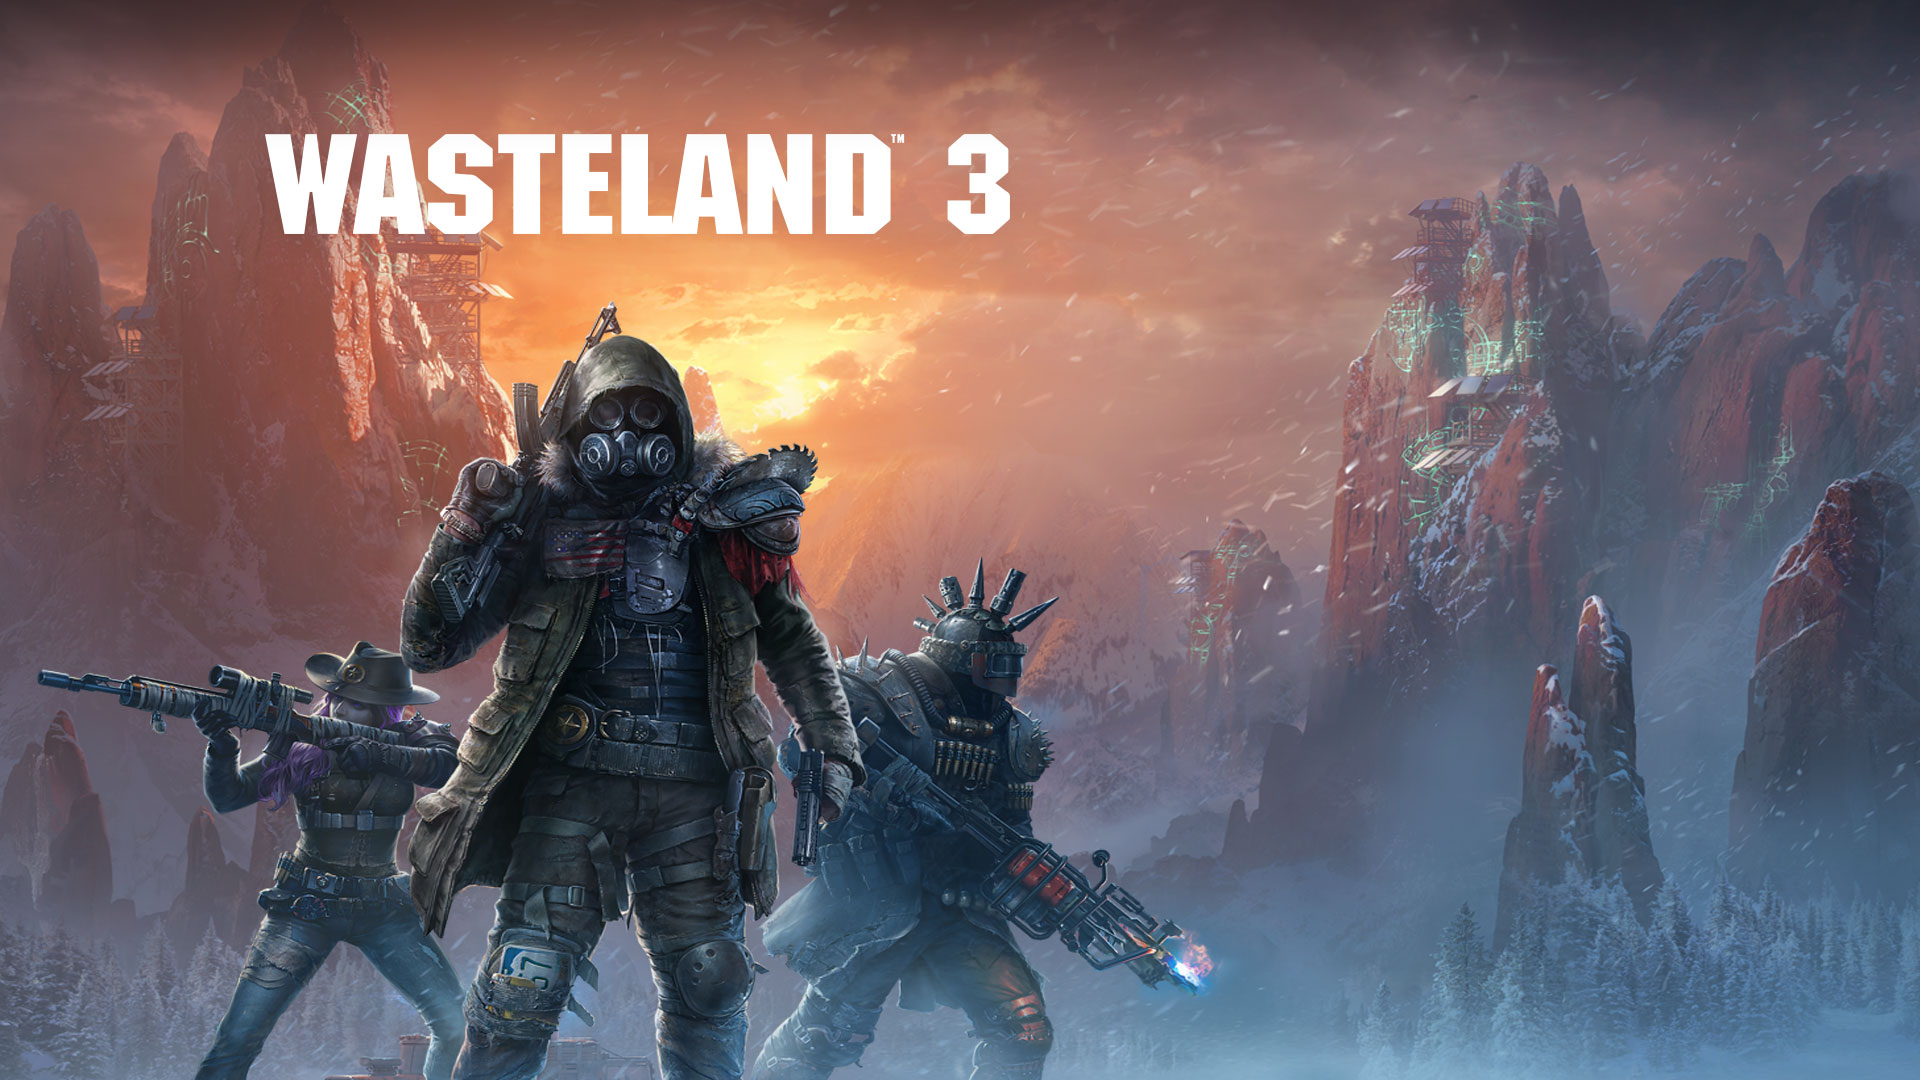 Wasteland 3，在暴風雪中，3 名全副武裝的角色戴著防毒面具